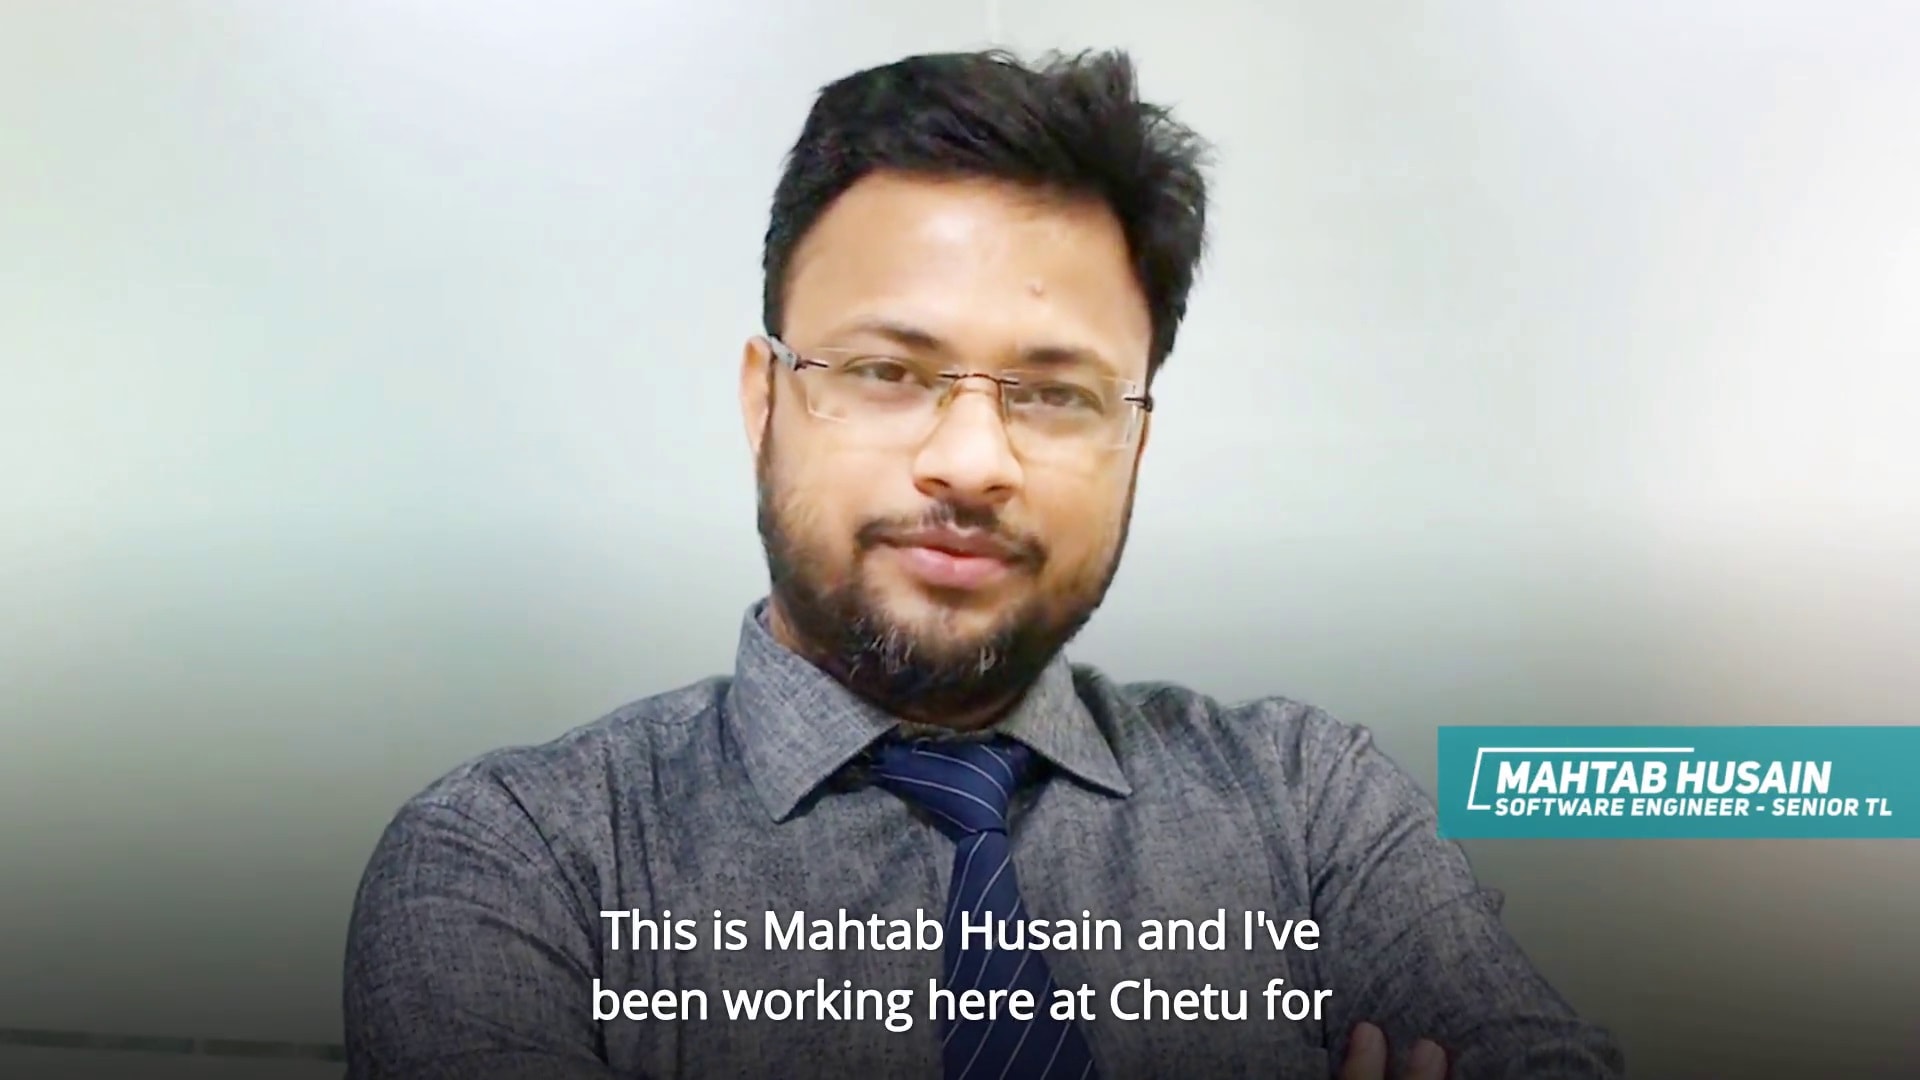  Software Engineer Senior TL - Mahtab Husain